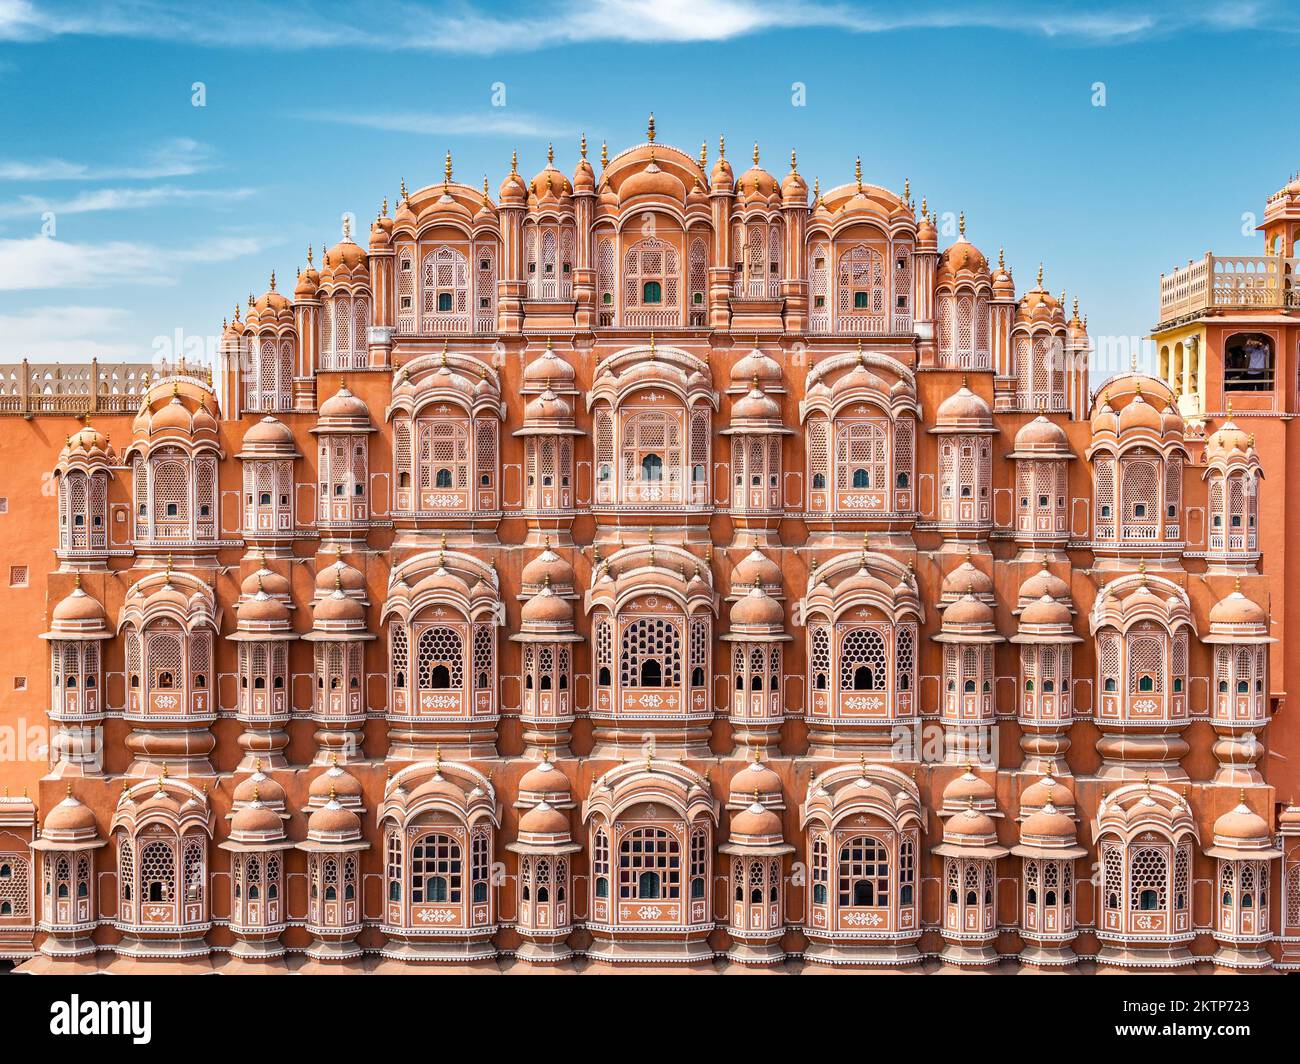 Hawa Mahal (Palace of the Winds) in Jaipur, Rajasthan, India. Stock Photo